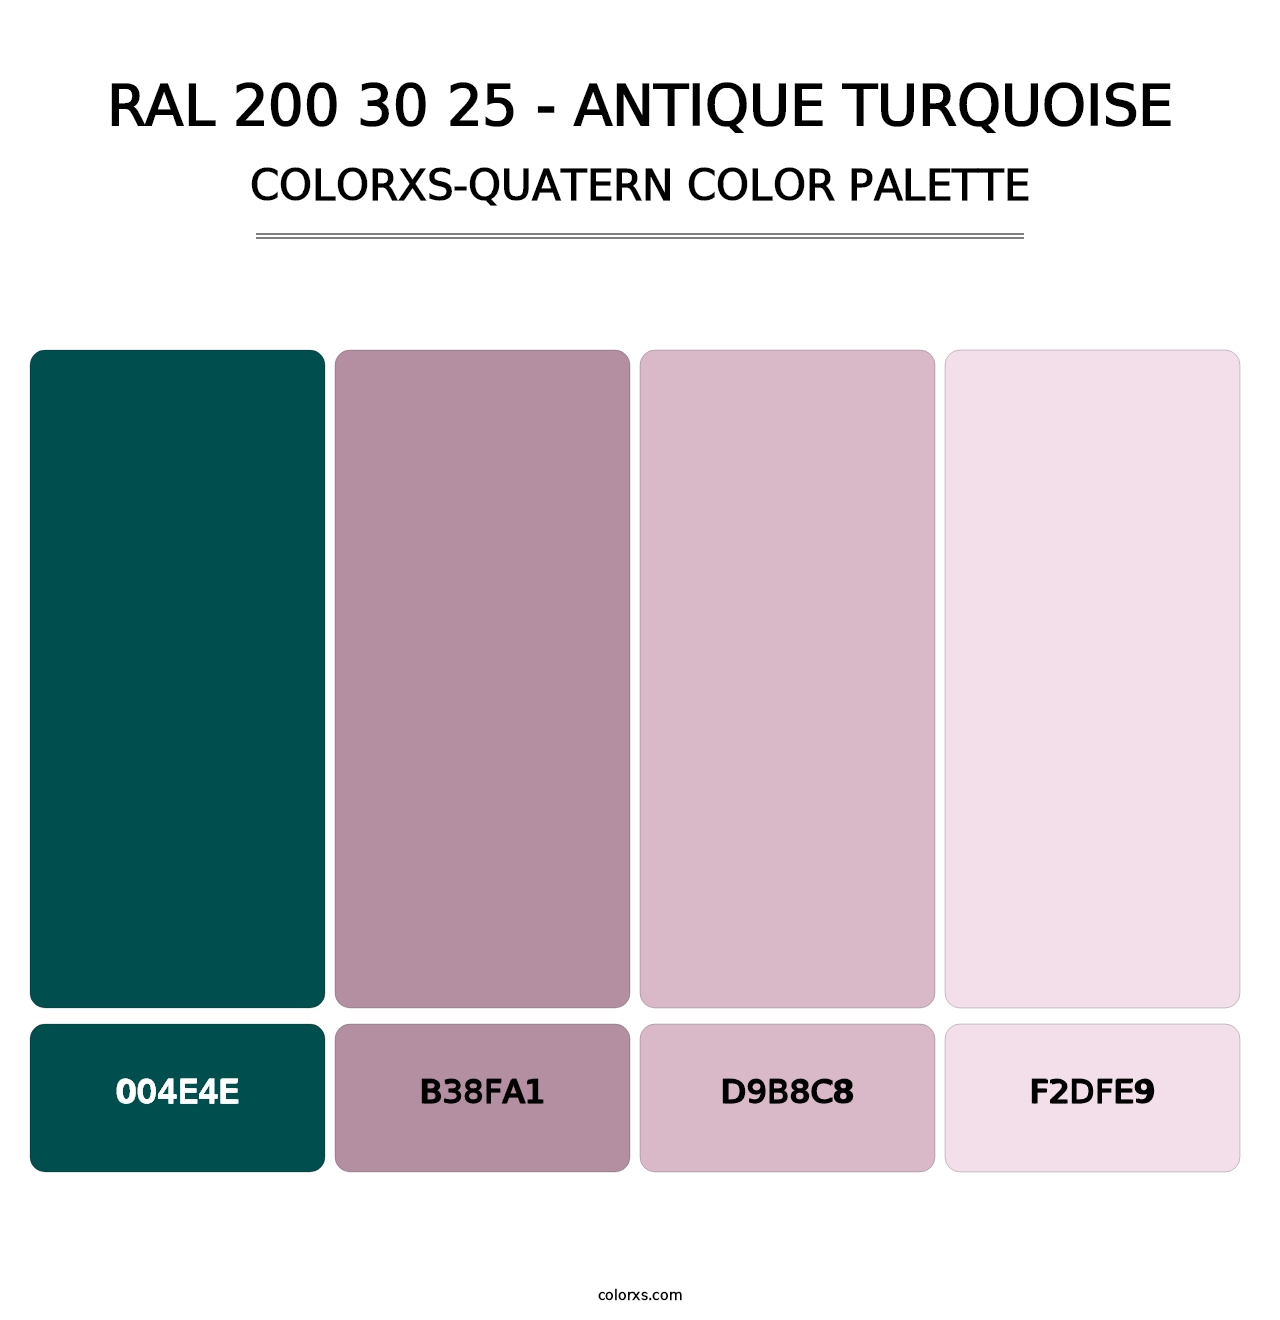 RAL 200 30 25 - Antique Turquoise - Colorxs Quatern Palette